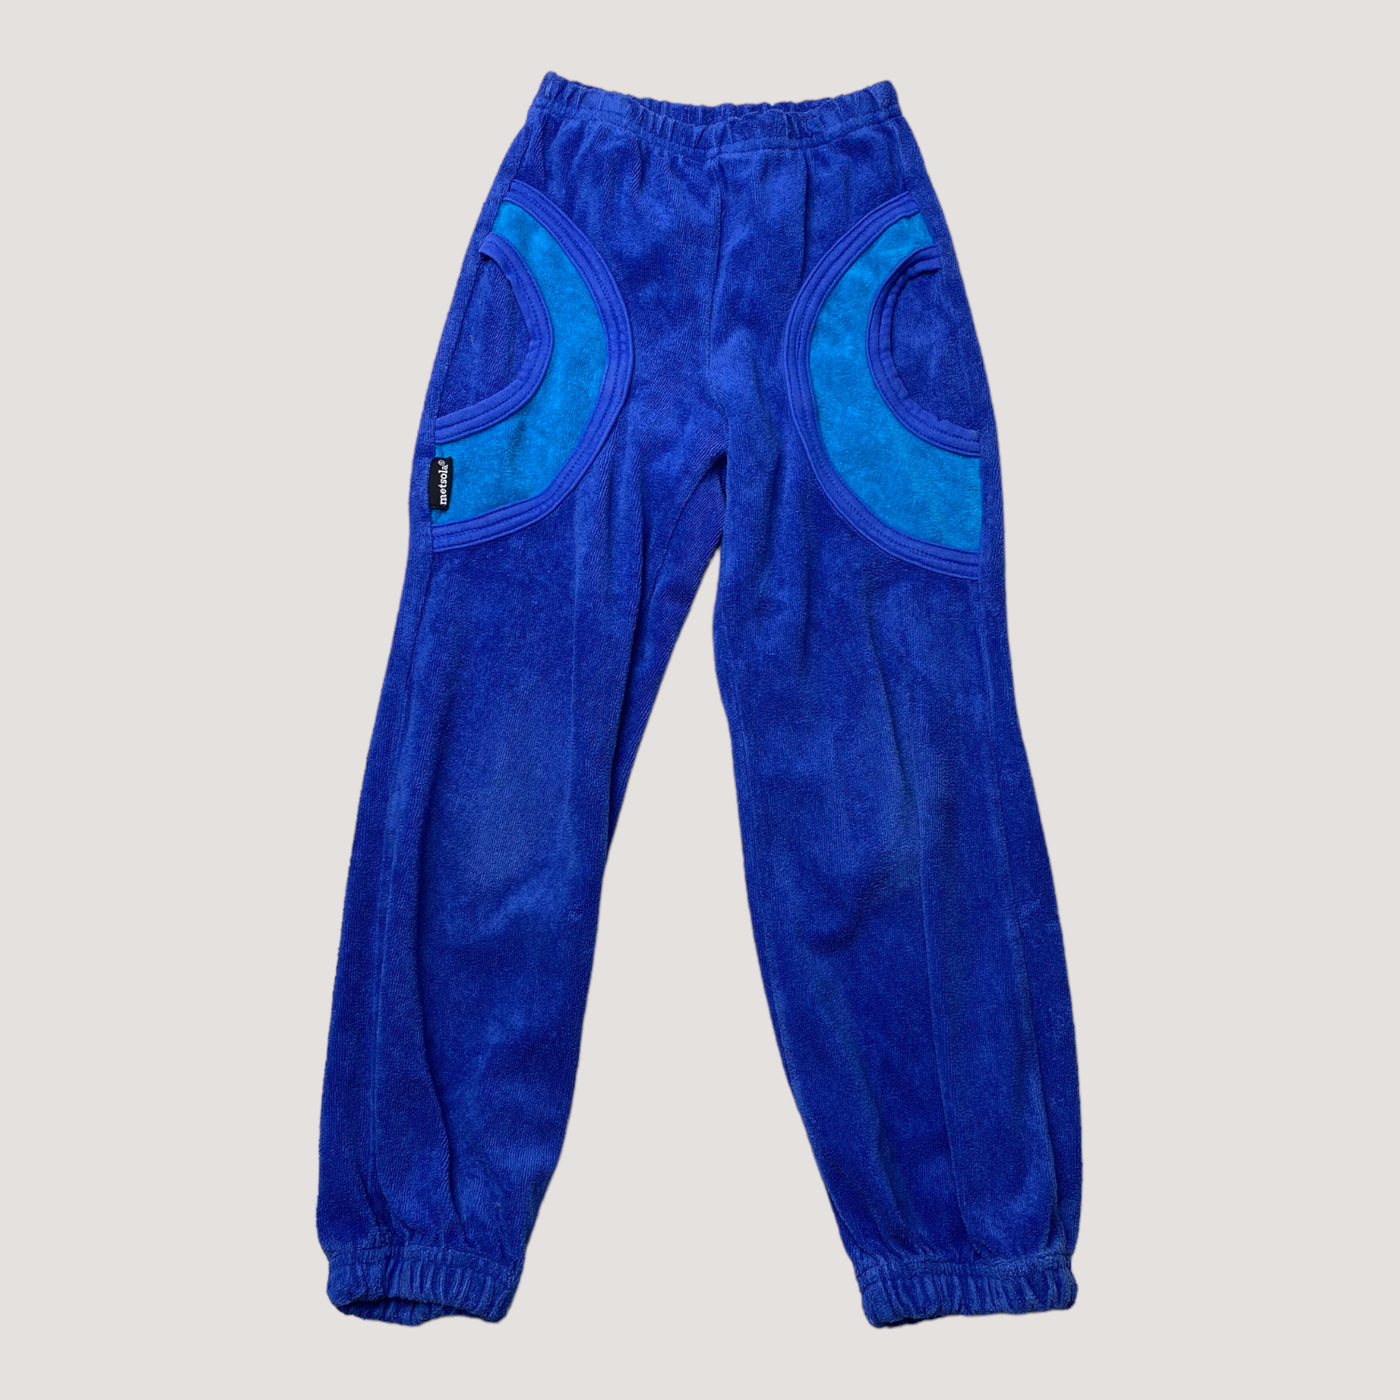 Metsola terry pants, blue | 116cm